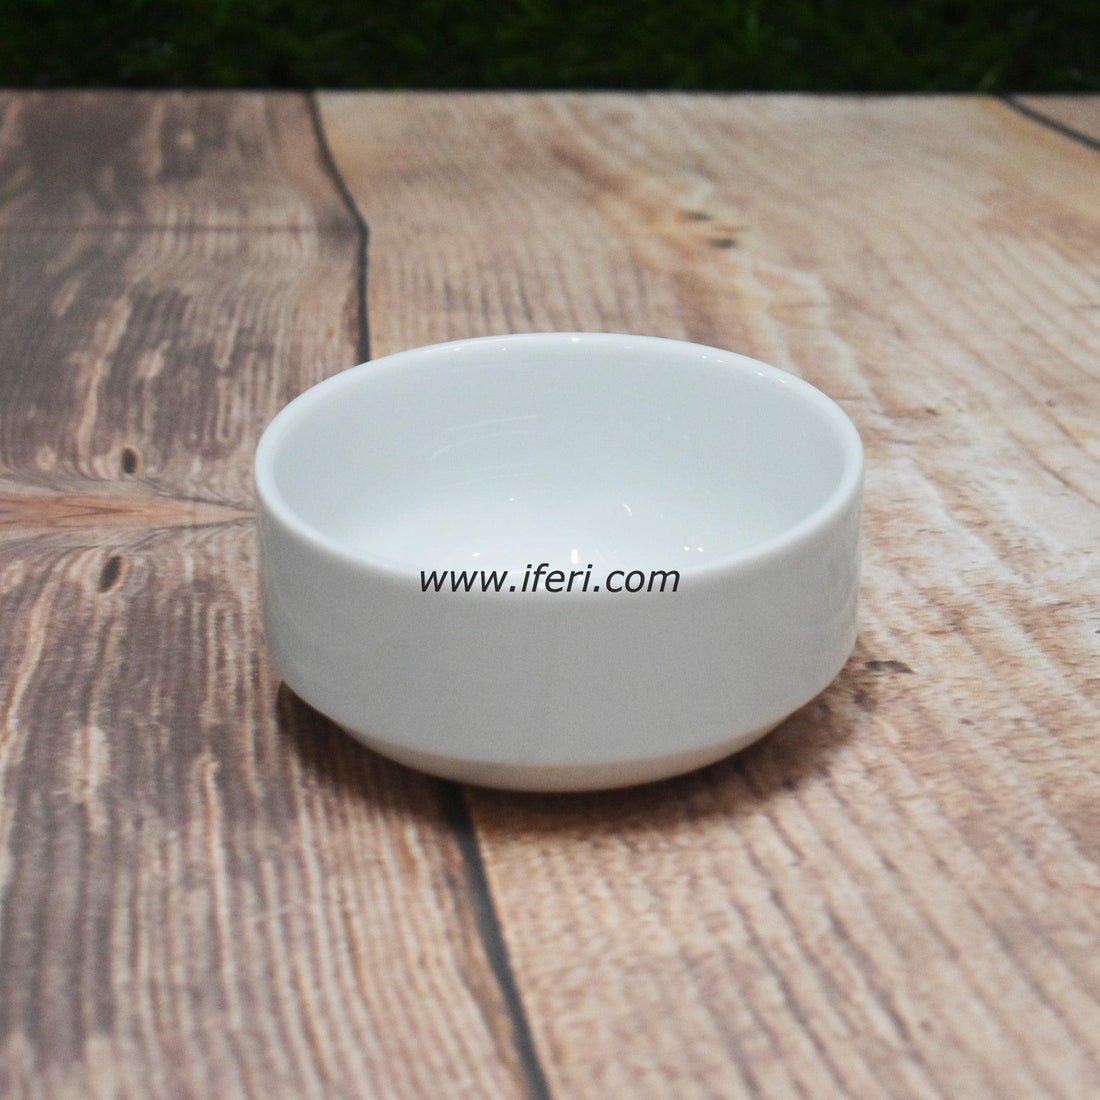 4 inch White Ceramic Soup Bowl SN4864 Price in Bangladesh - iferi.com